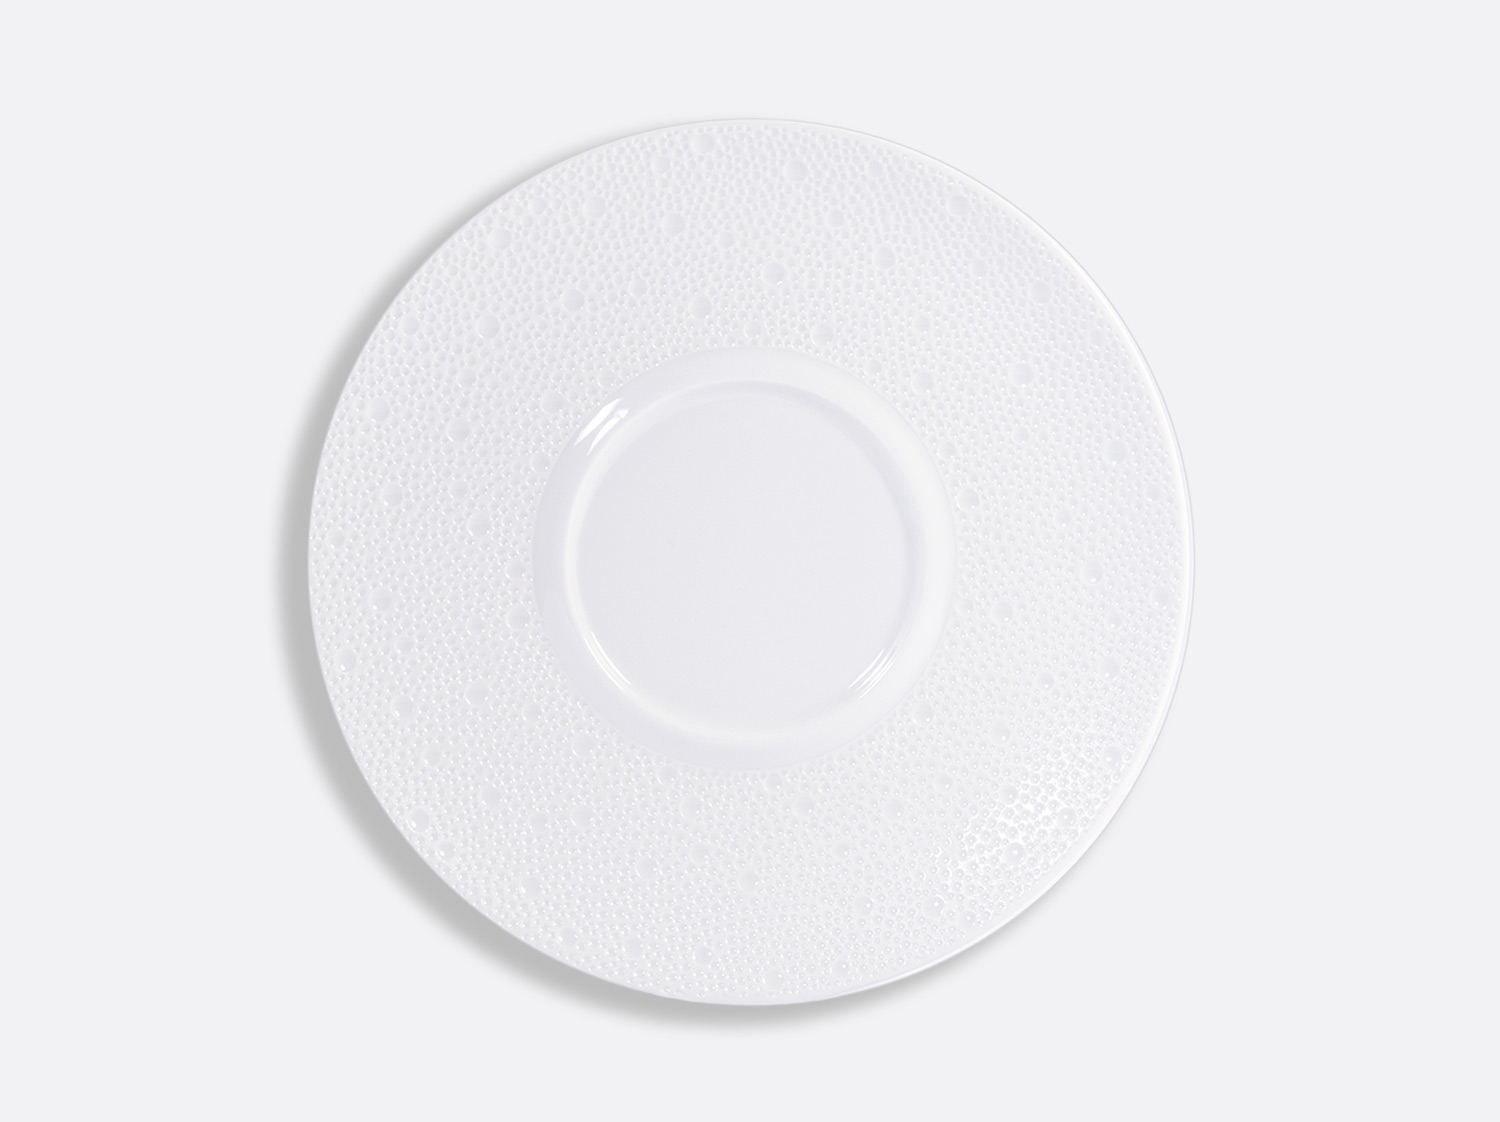 China Shogun plate 26 cm of the collection Ecume blanc aile mat | Bernardaud